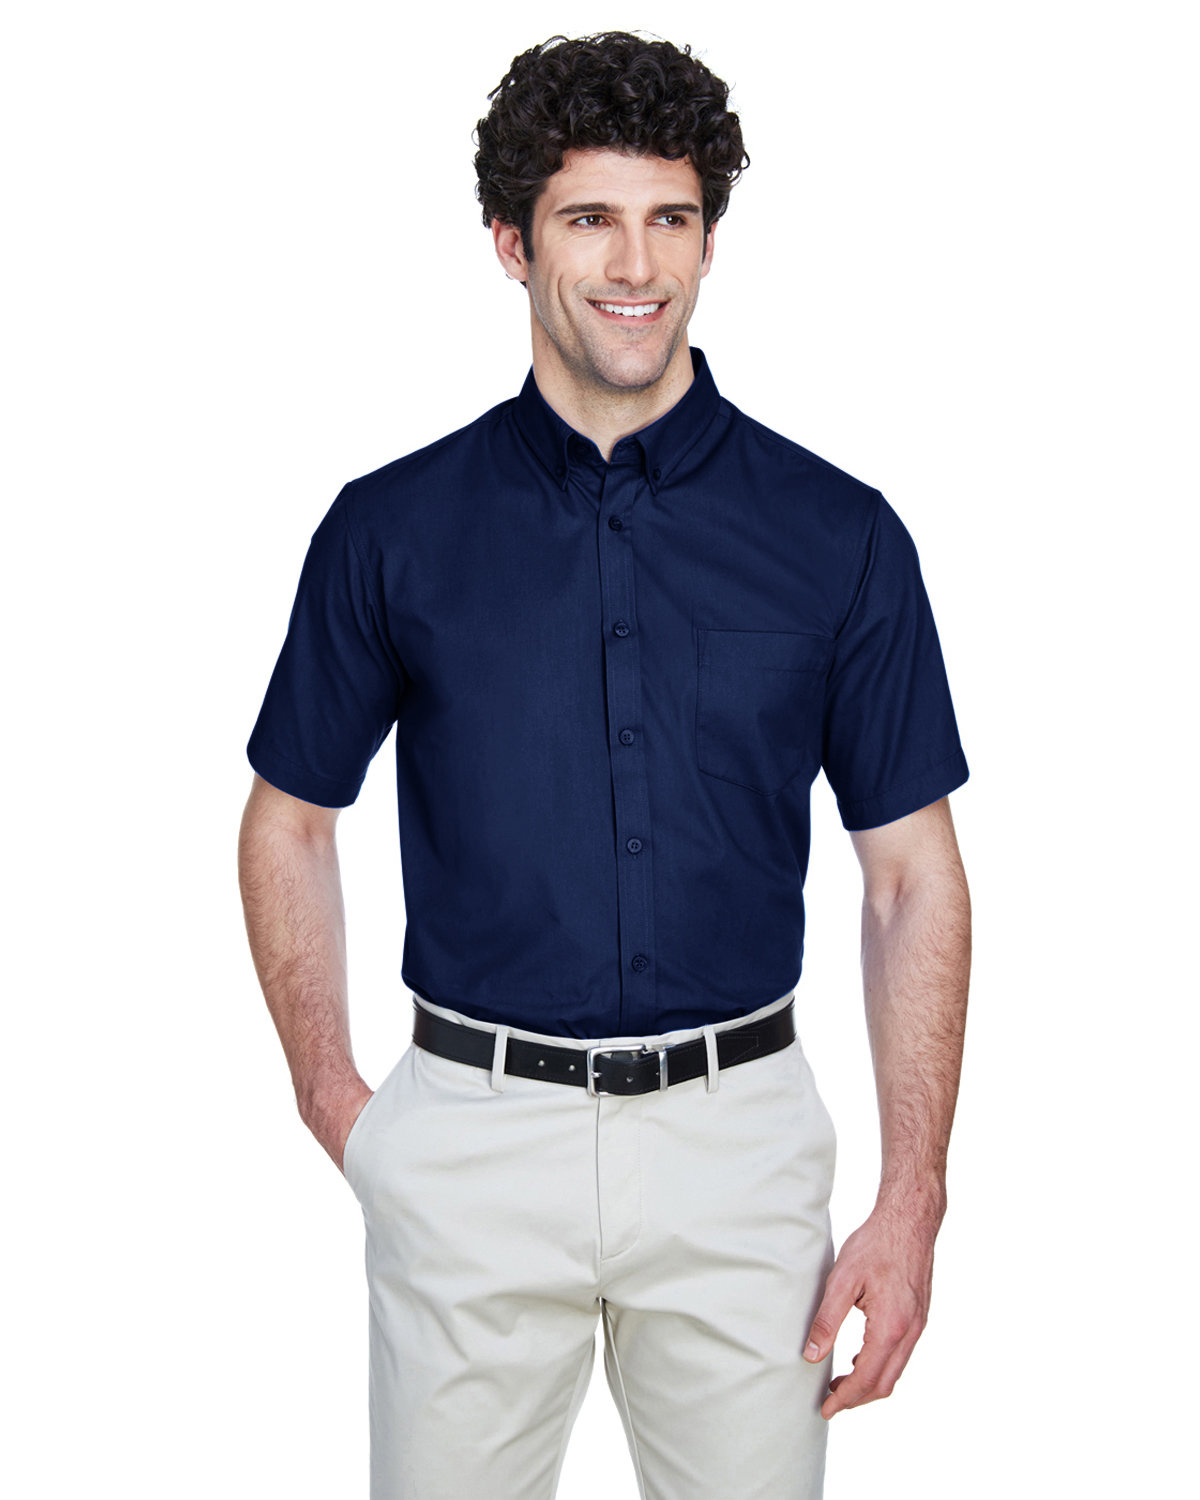 Core 365 Men's Optimum Short-Sleeve Twill Shirt CLASSIC NAVY 